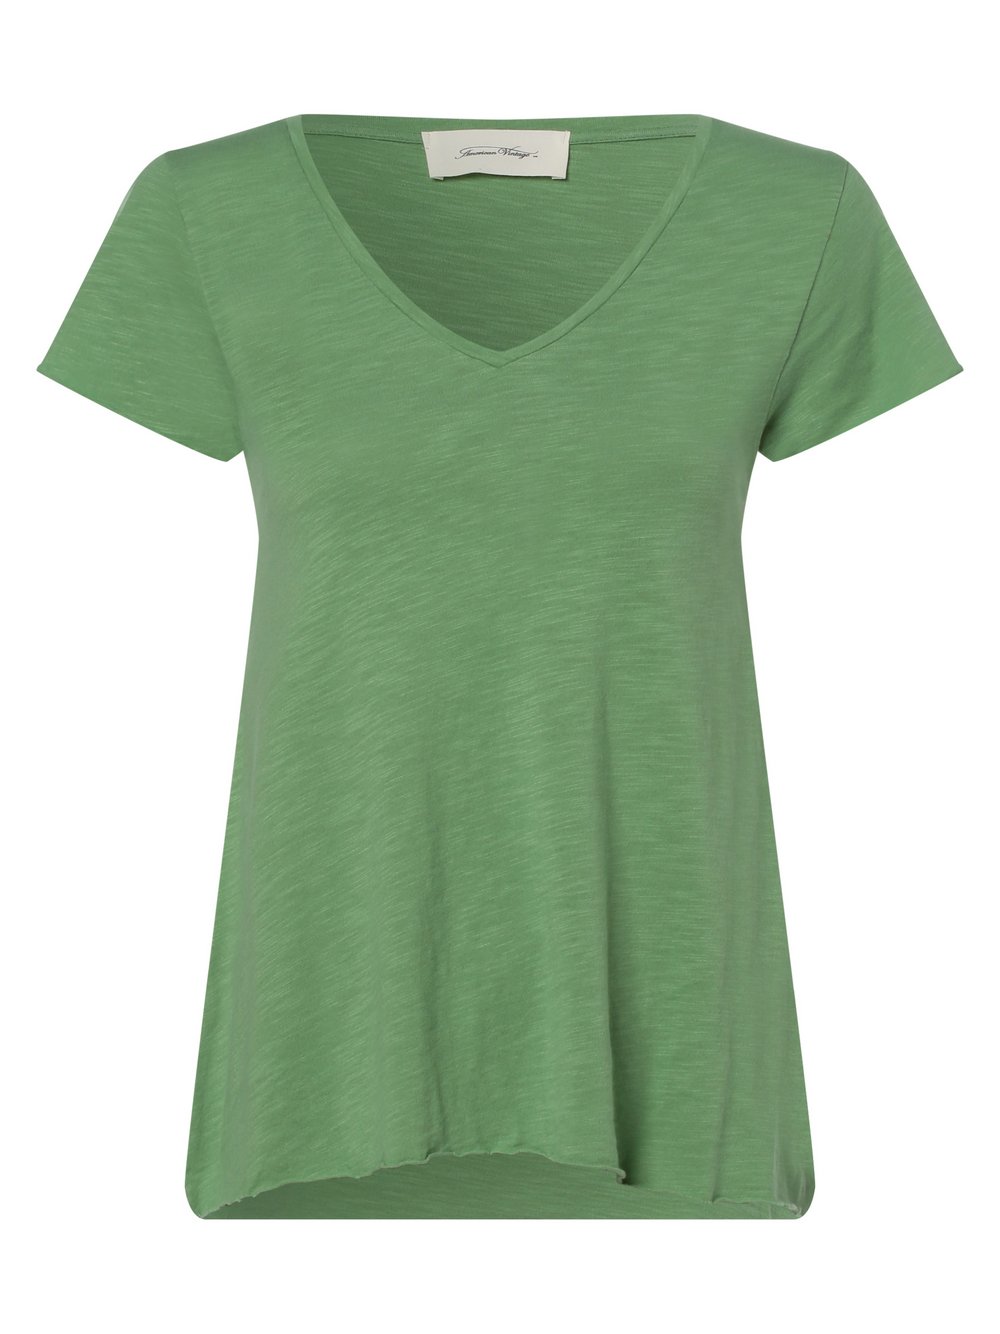 American vintage - T-shirt damski – Jacksonville, zielony